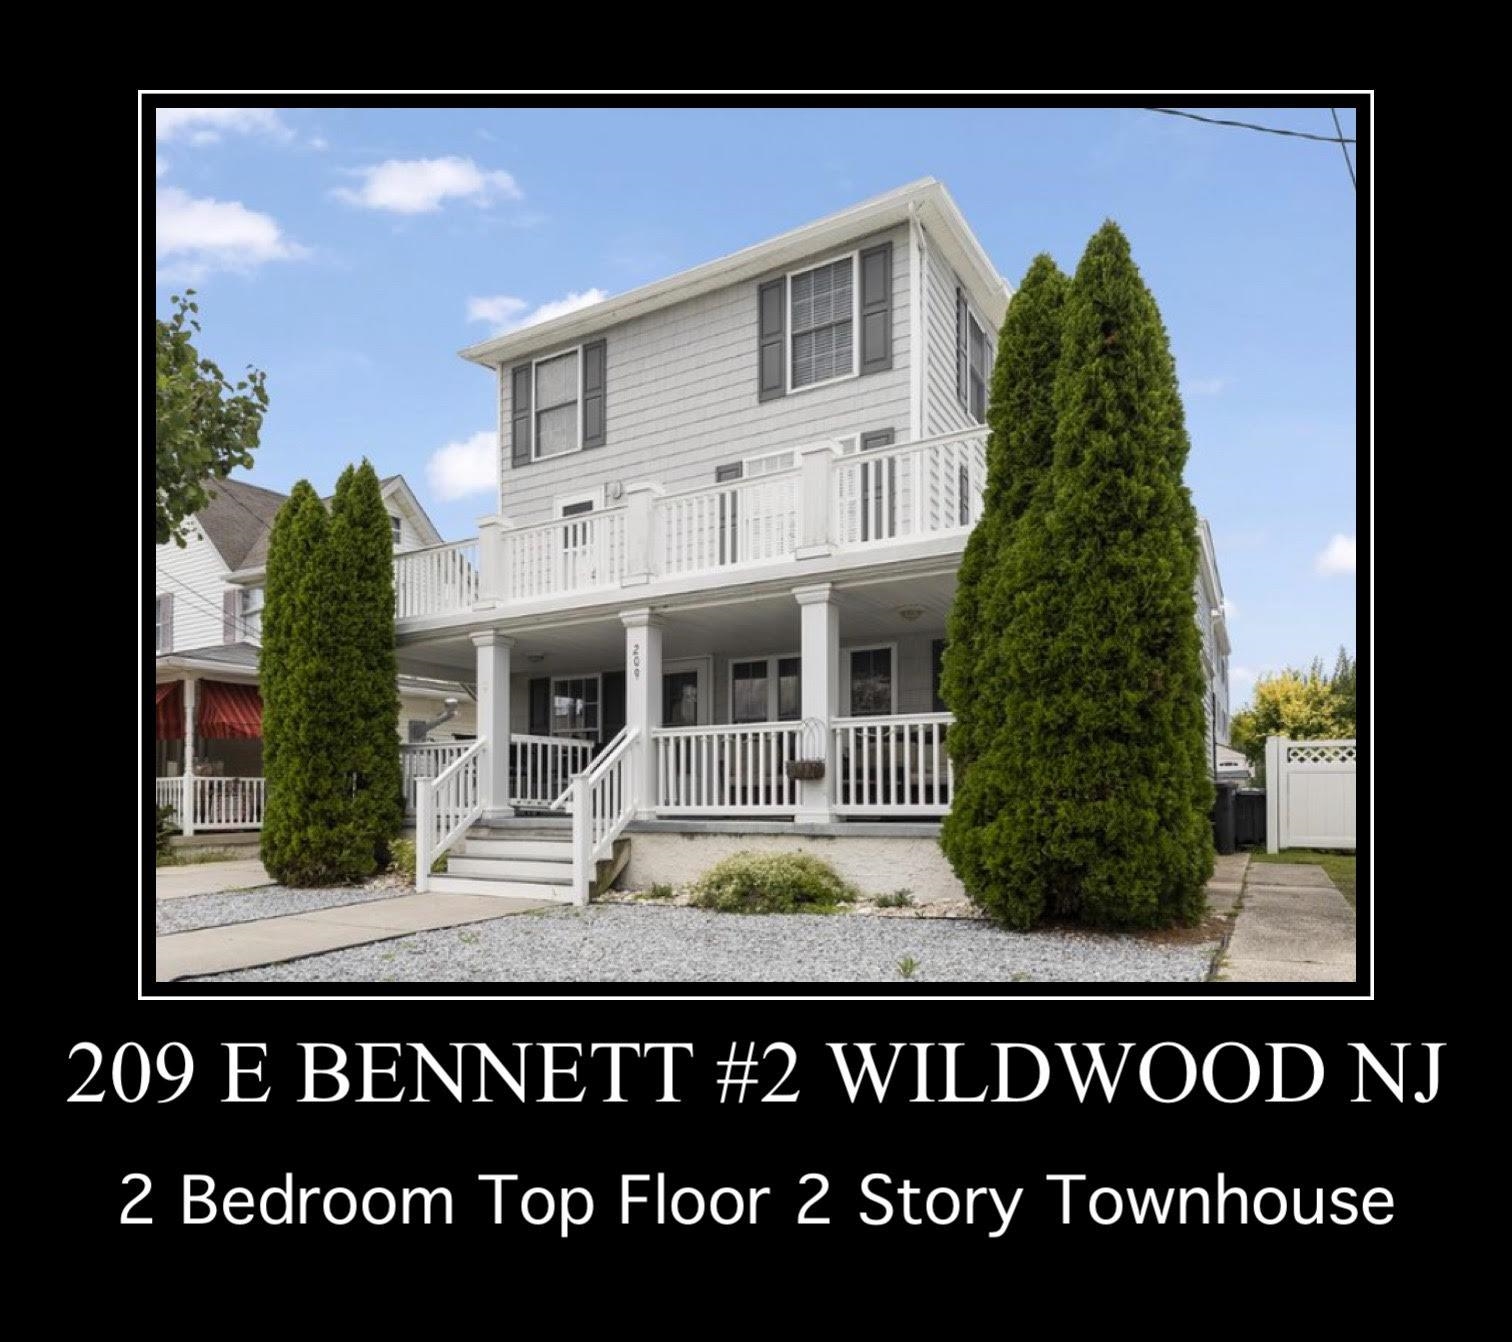 209 E Bennett Avenue - Wildwood